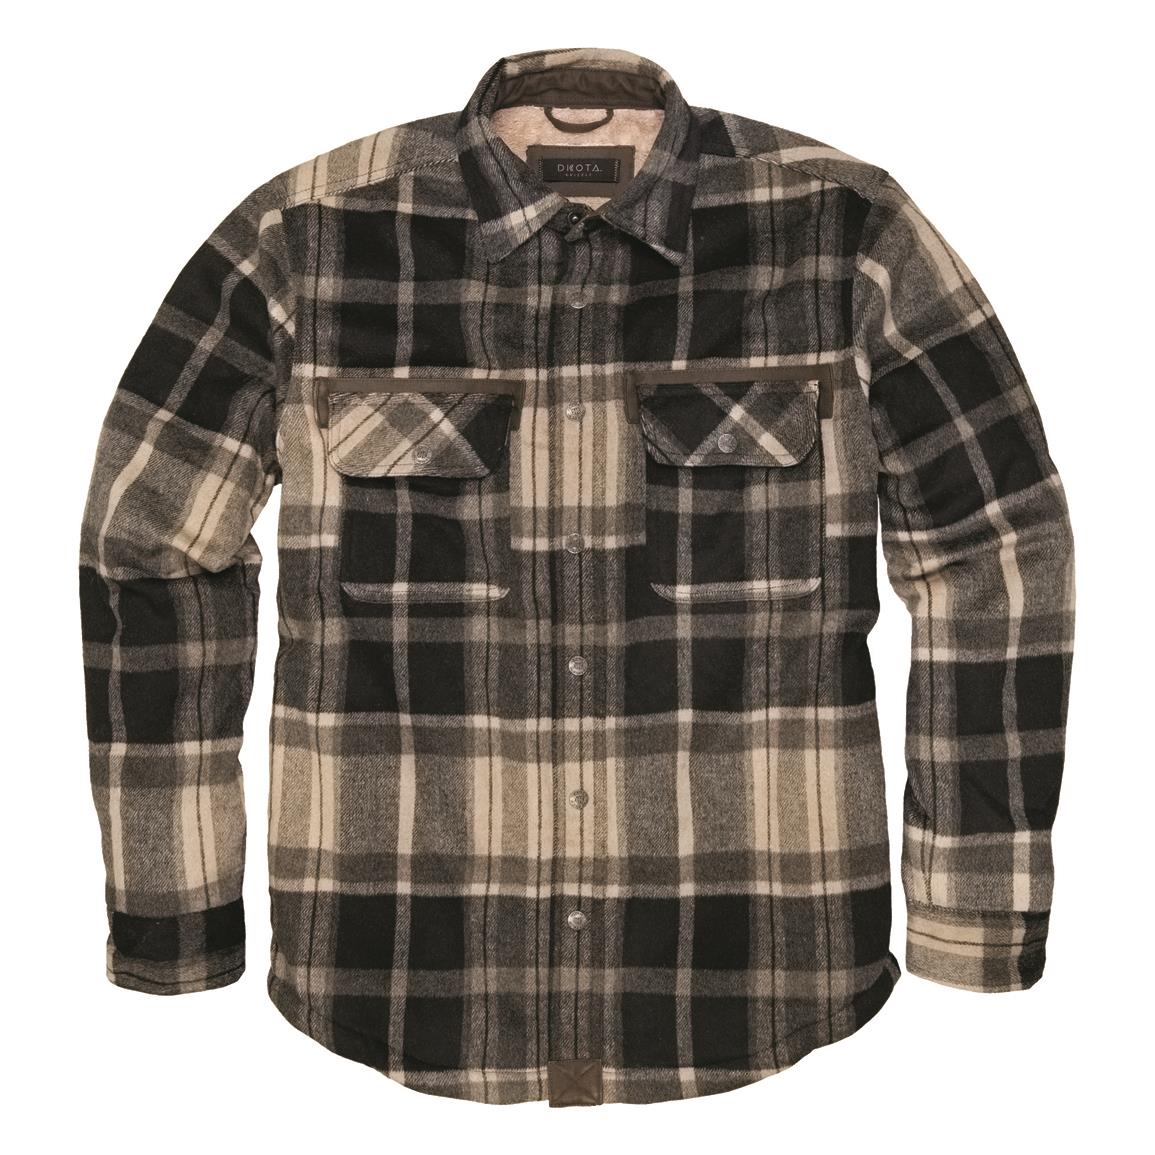 DKOTA GRIZZLY Men's Burke Wool-blend Sherpa-lined Shirt Jacket, Charcoal